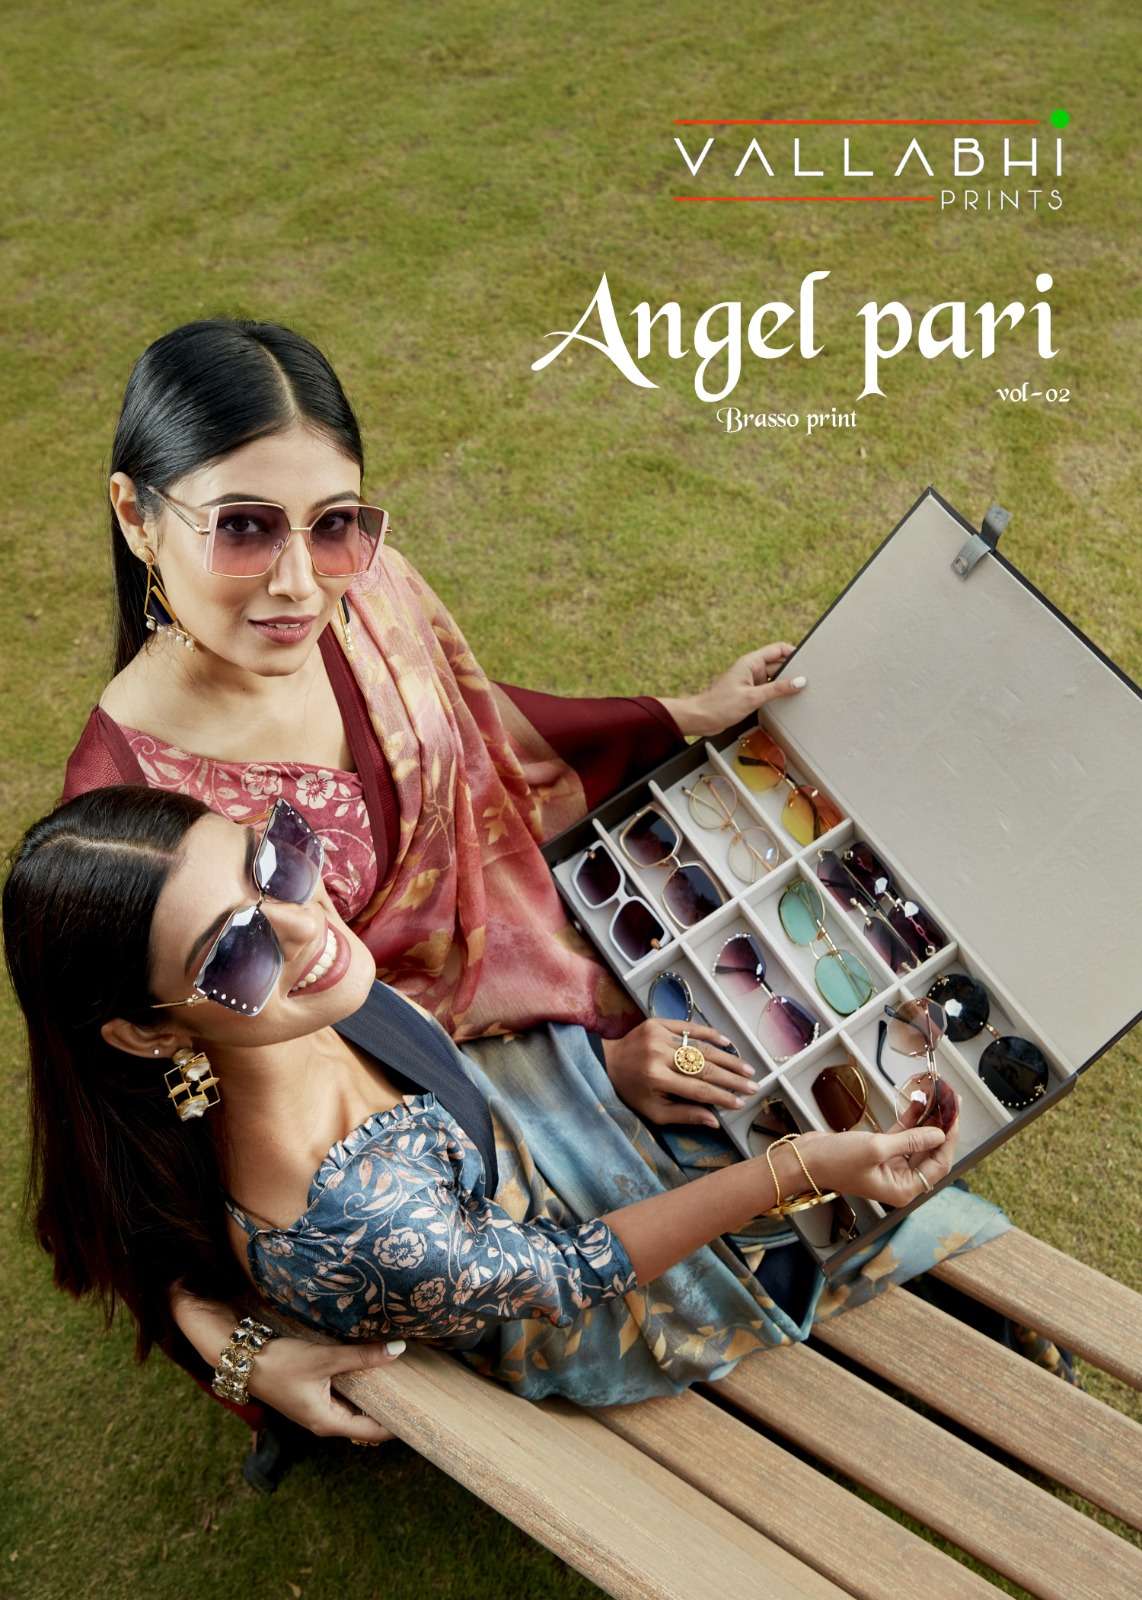 Vallabhi angelpari vol 2 brasso print fancy sarees collection in surat